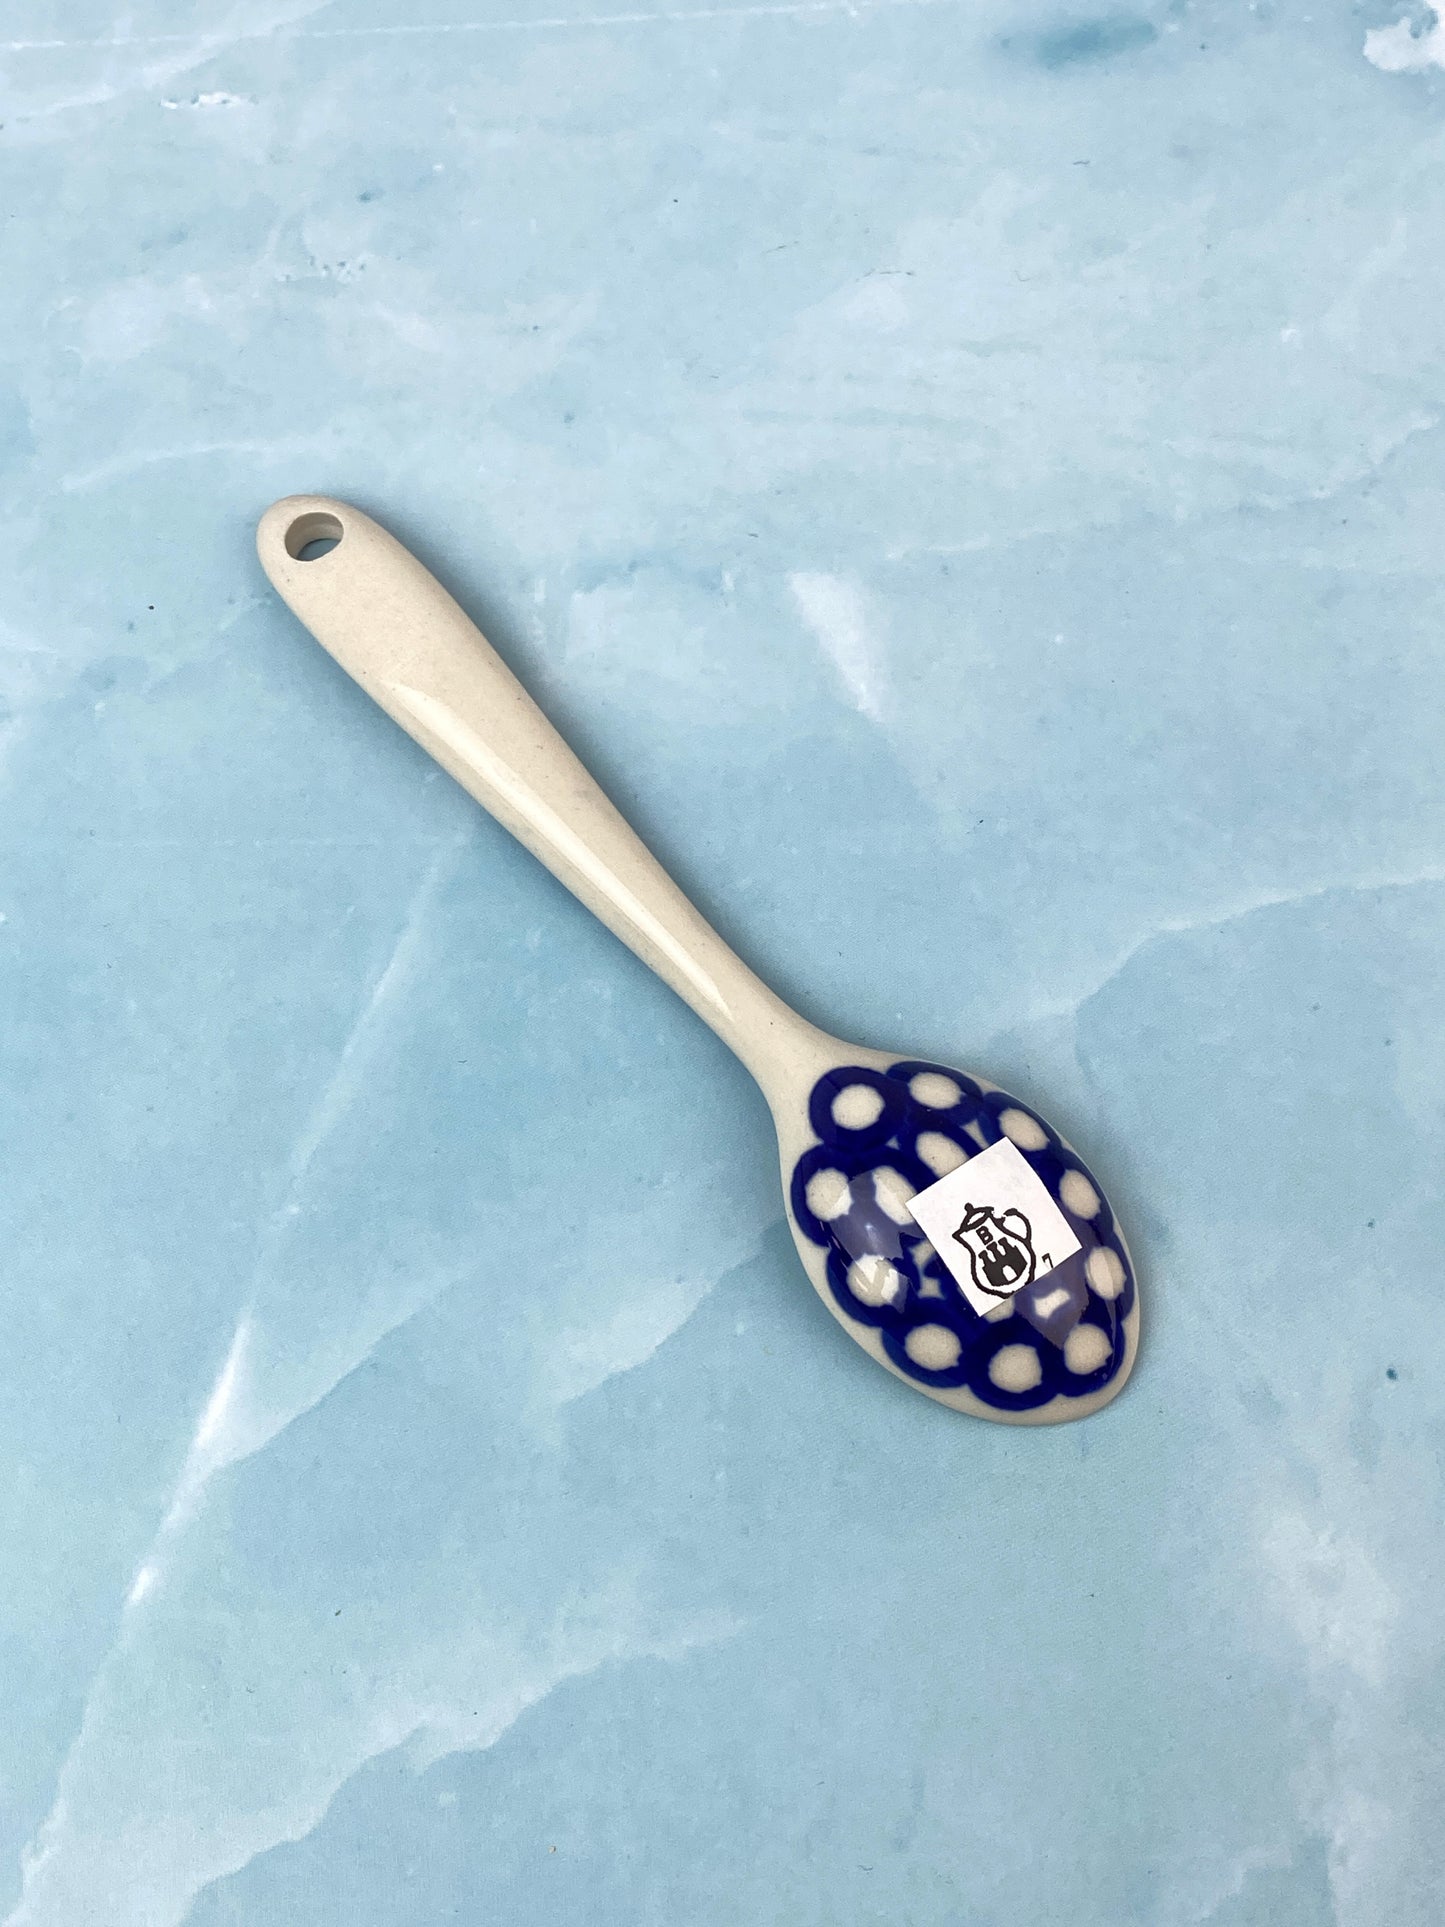 SALE Small Sugar Spoon - Shape 592 - Pattern 13